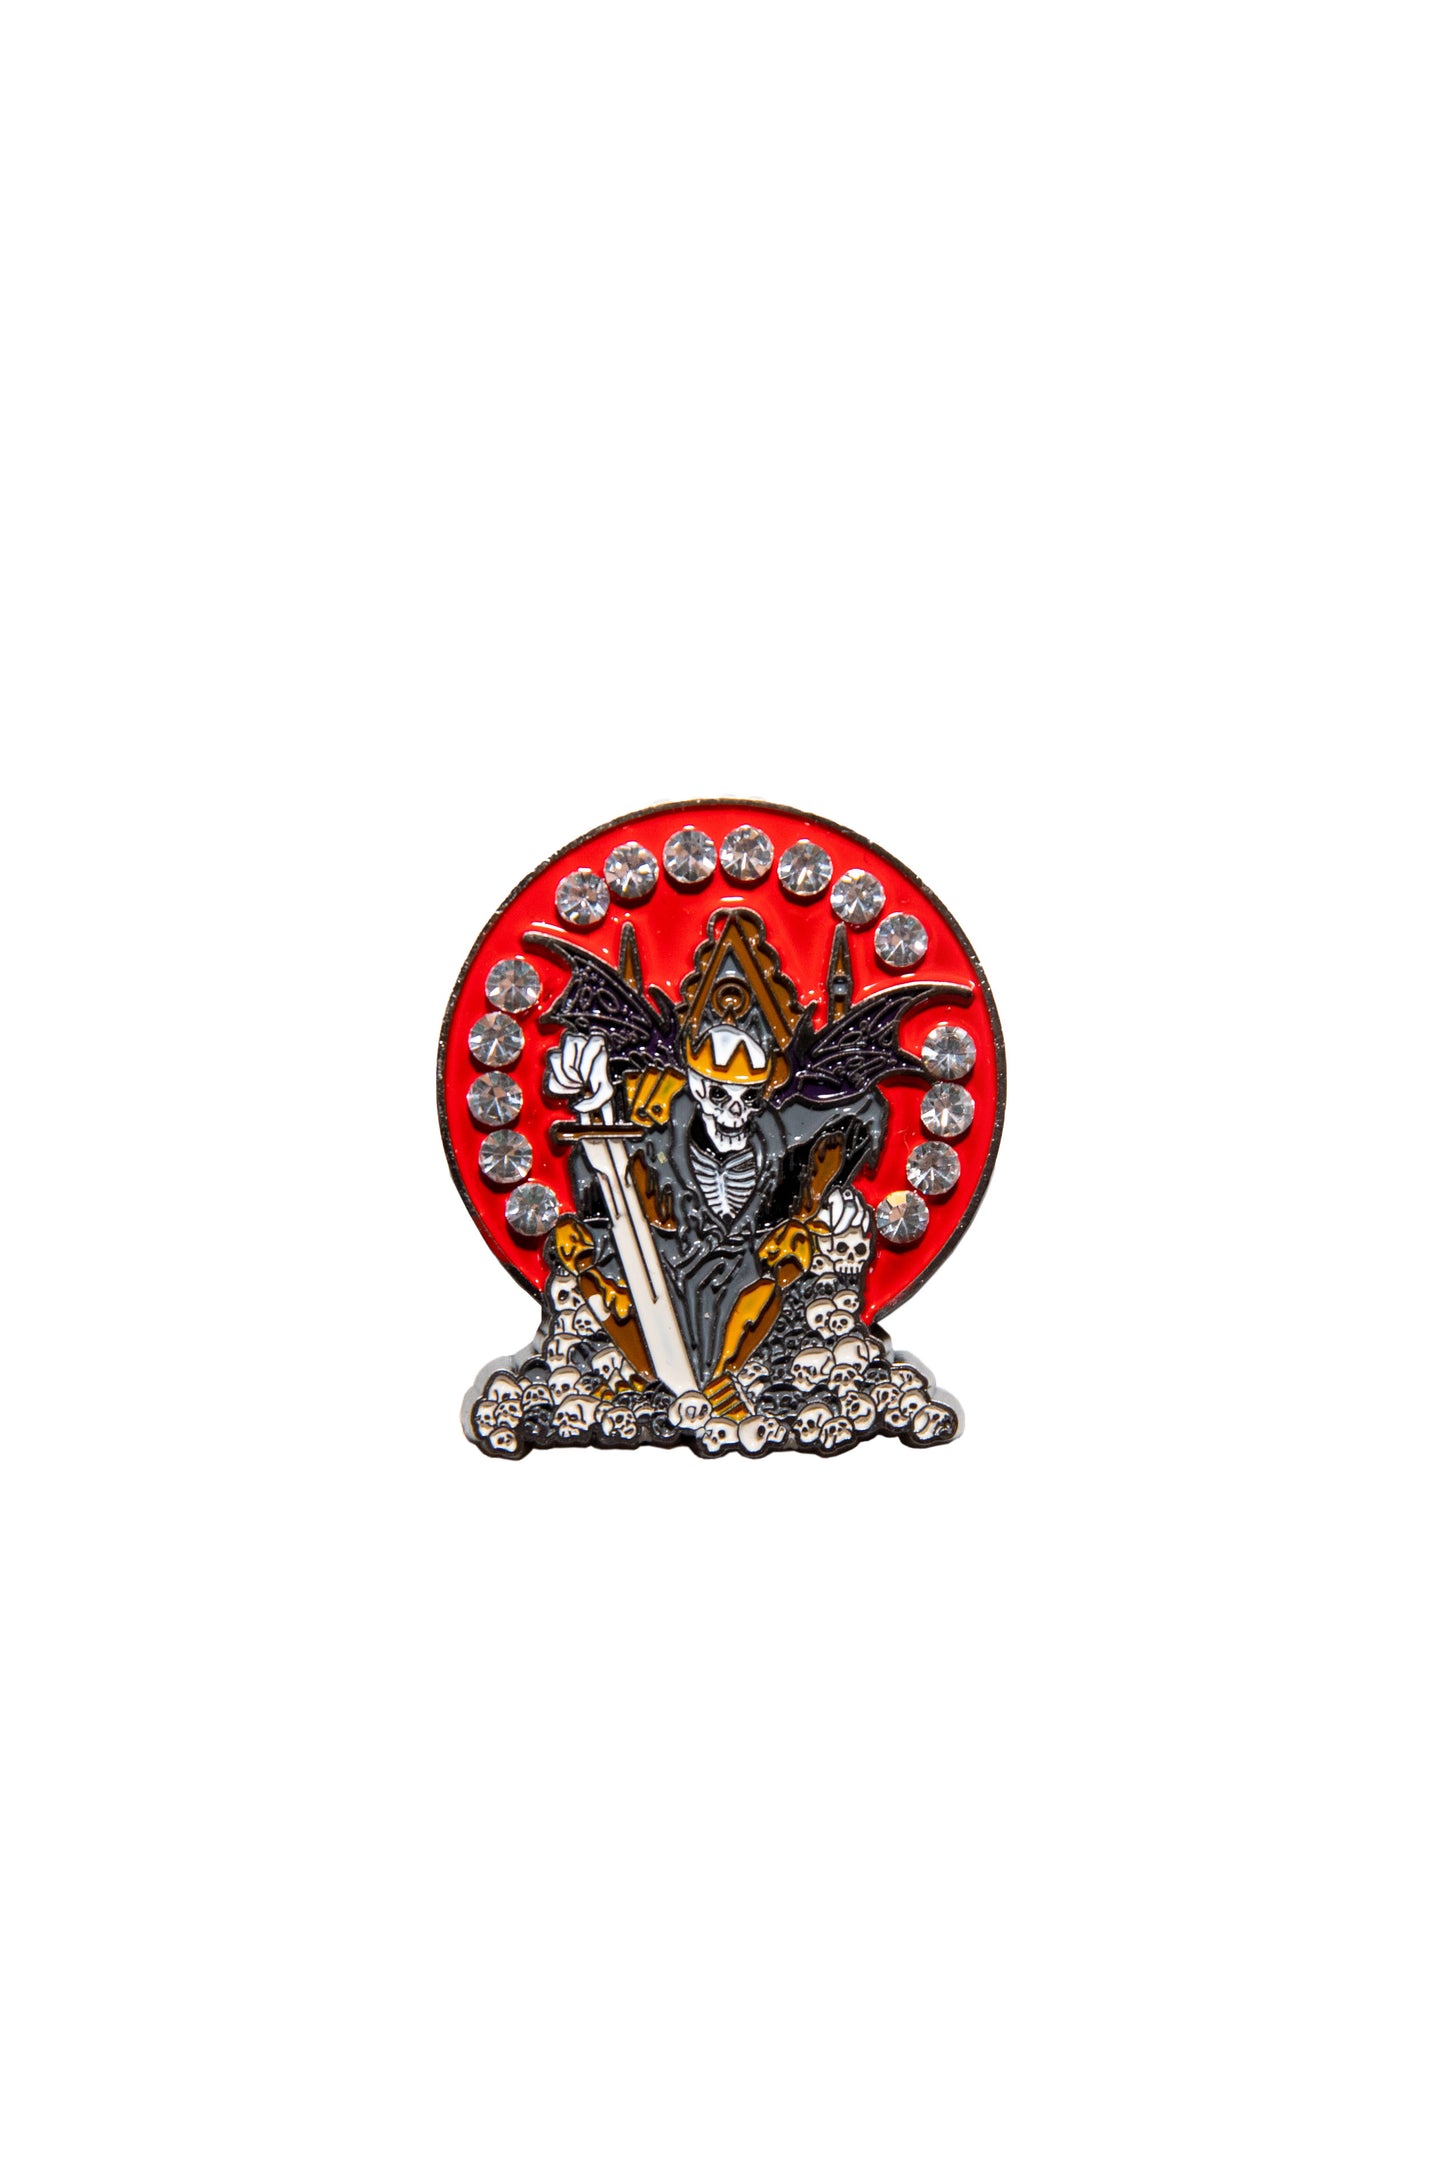 Death Throne - Collectors Pin